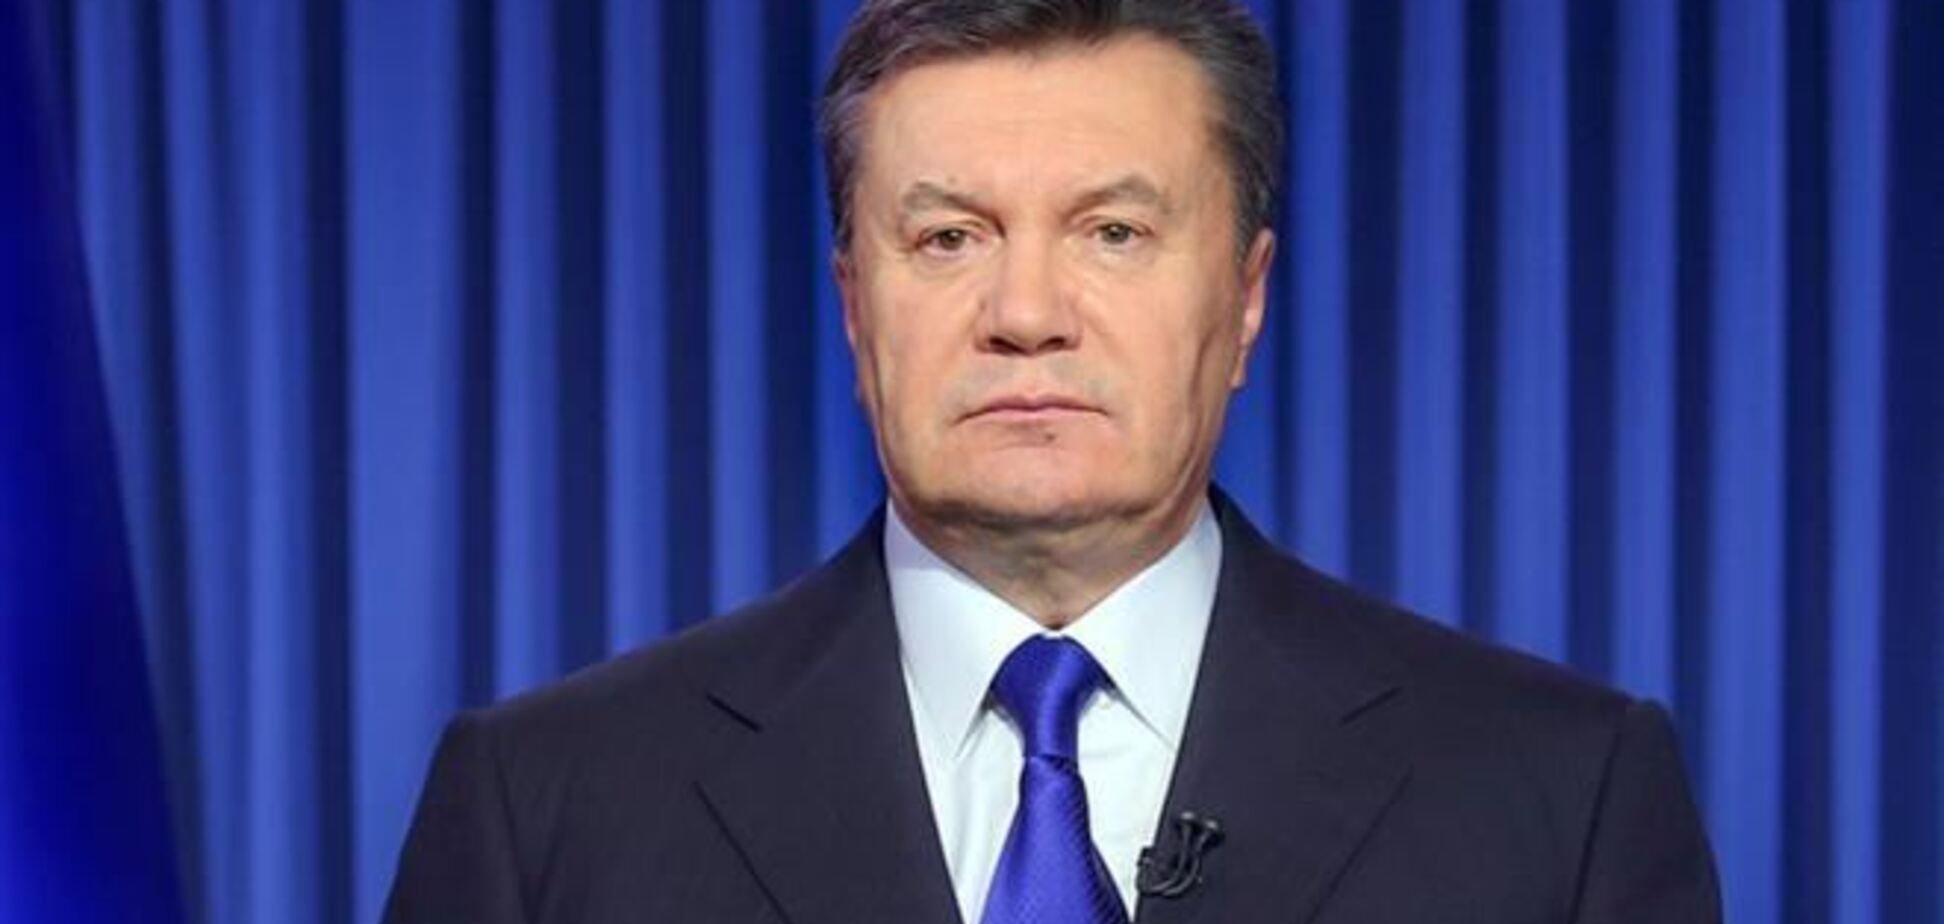 ГПУ заподозрила Януковича в попытке захвата власти: открыто дело